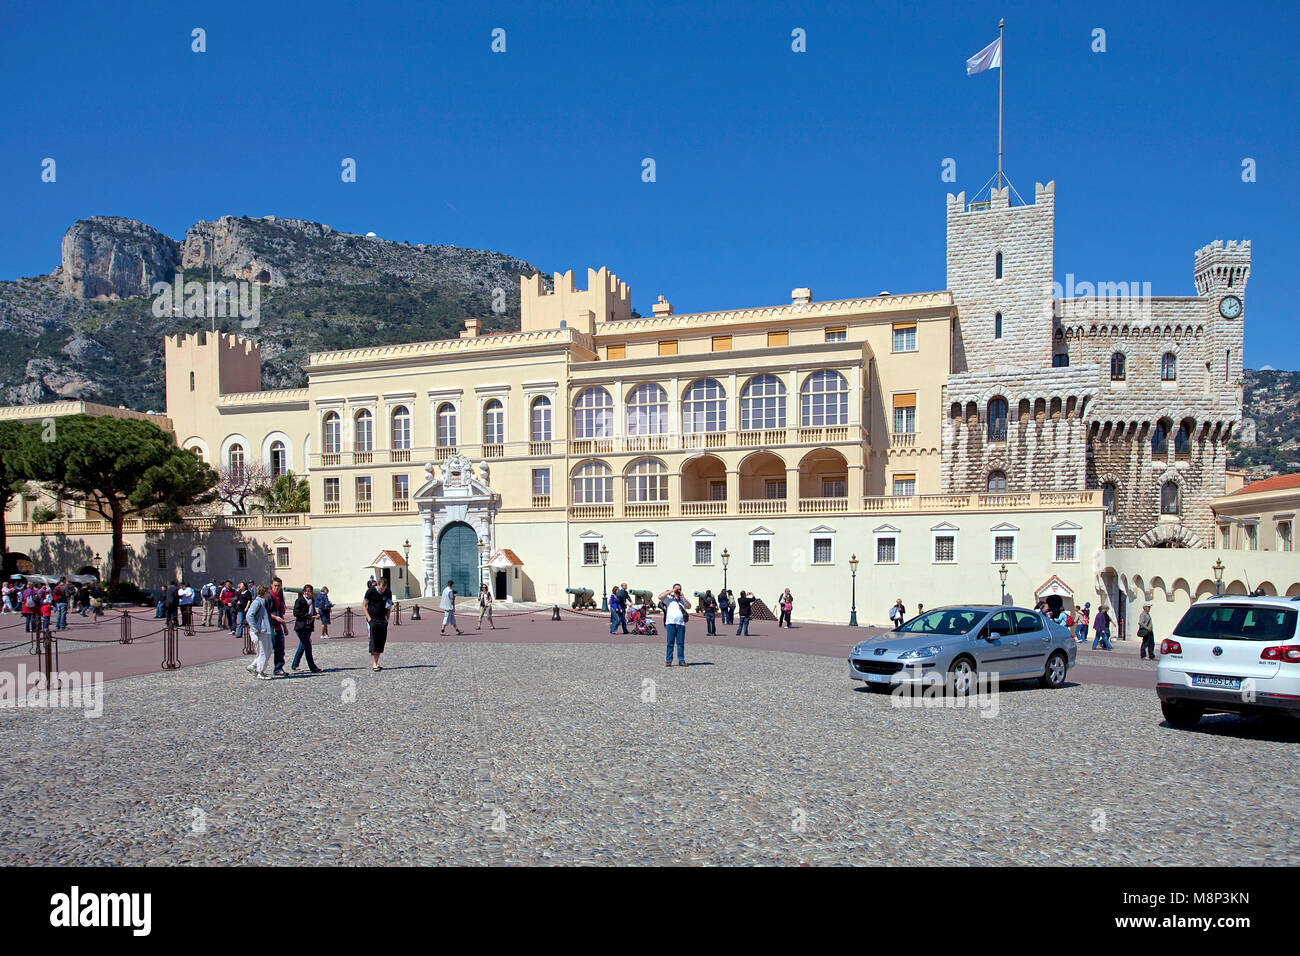 Palais Princier, Prinzen Palast von Monaco, offizielle Residenz des souveränen Fürsten von Monaco, Côte d'Azur, Côte d'Azur, Südfrankreich, Europa Stockfoto